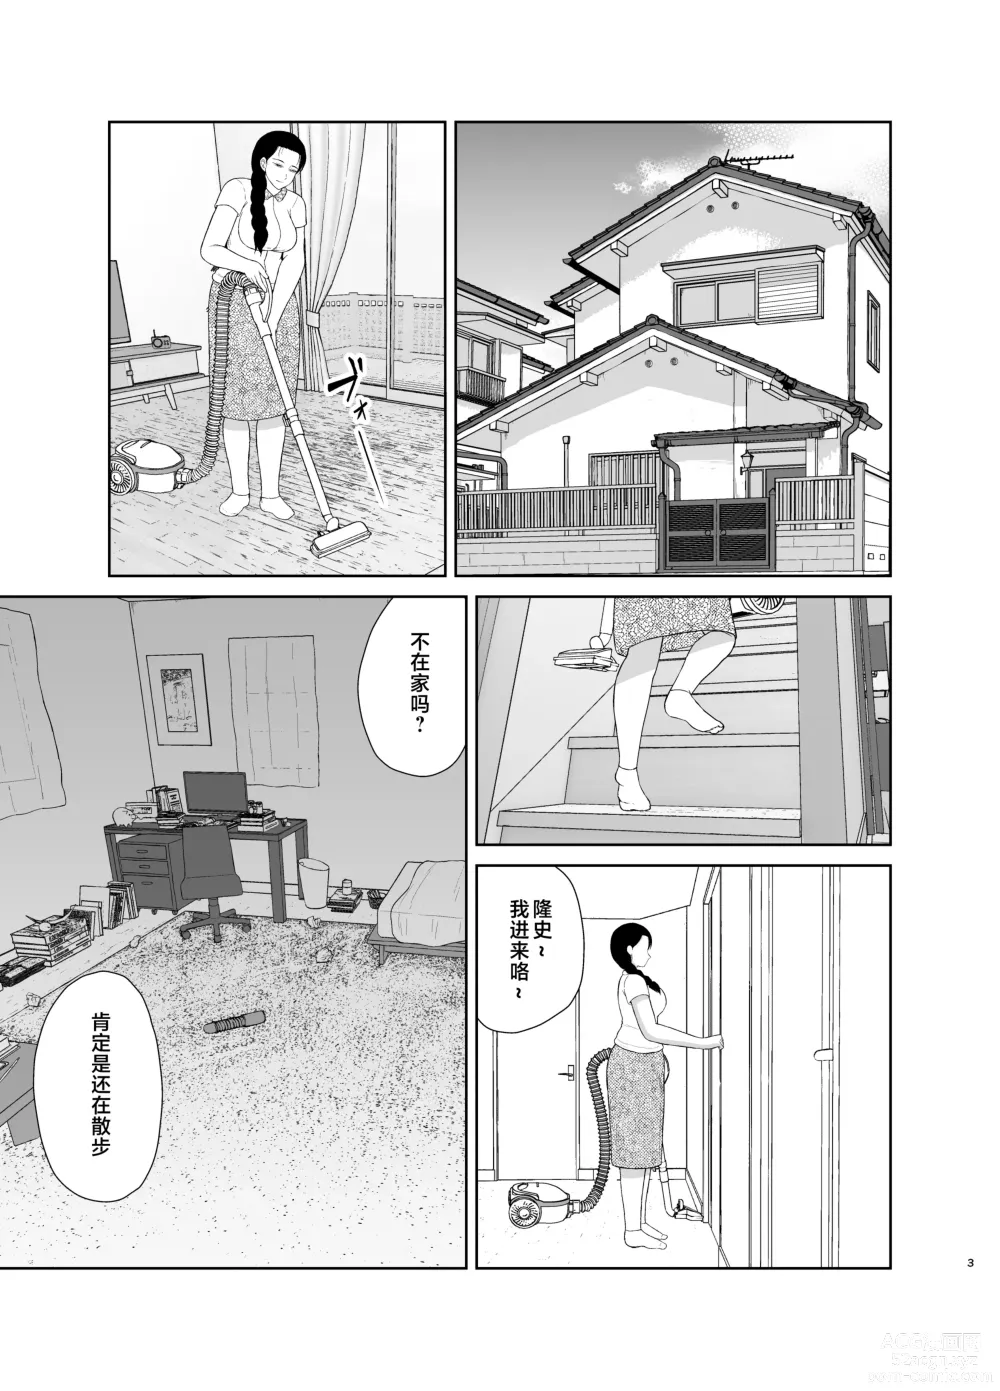 Page 3 of doujinshi Haha wa Omocha 1-2